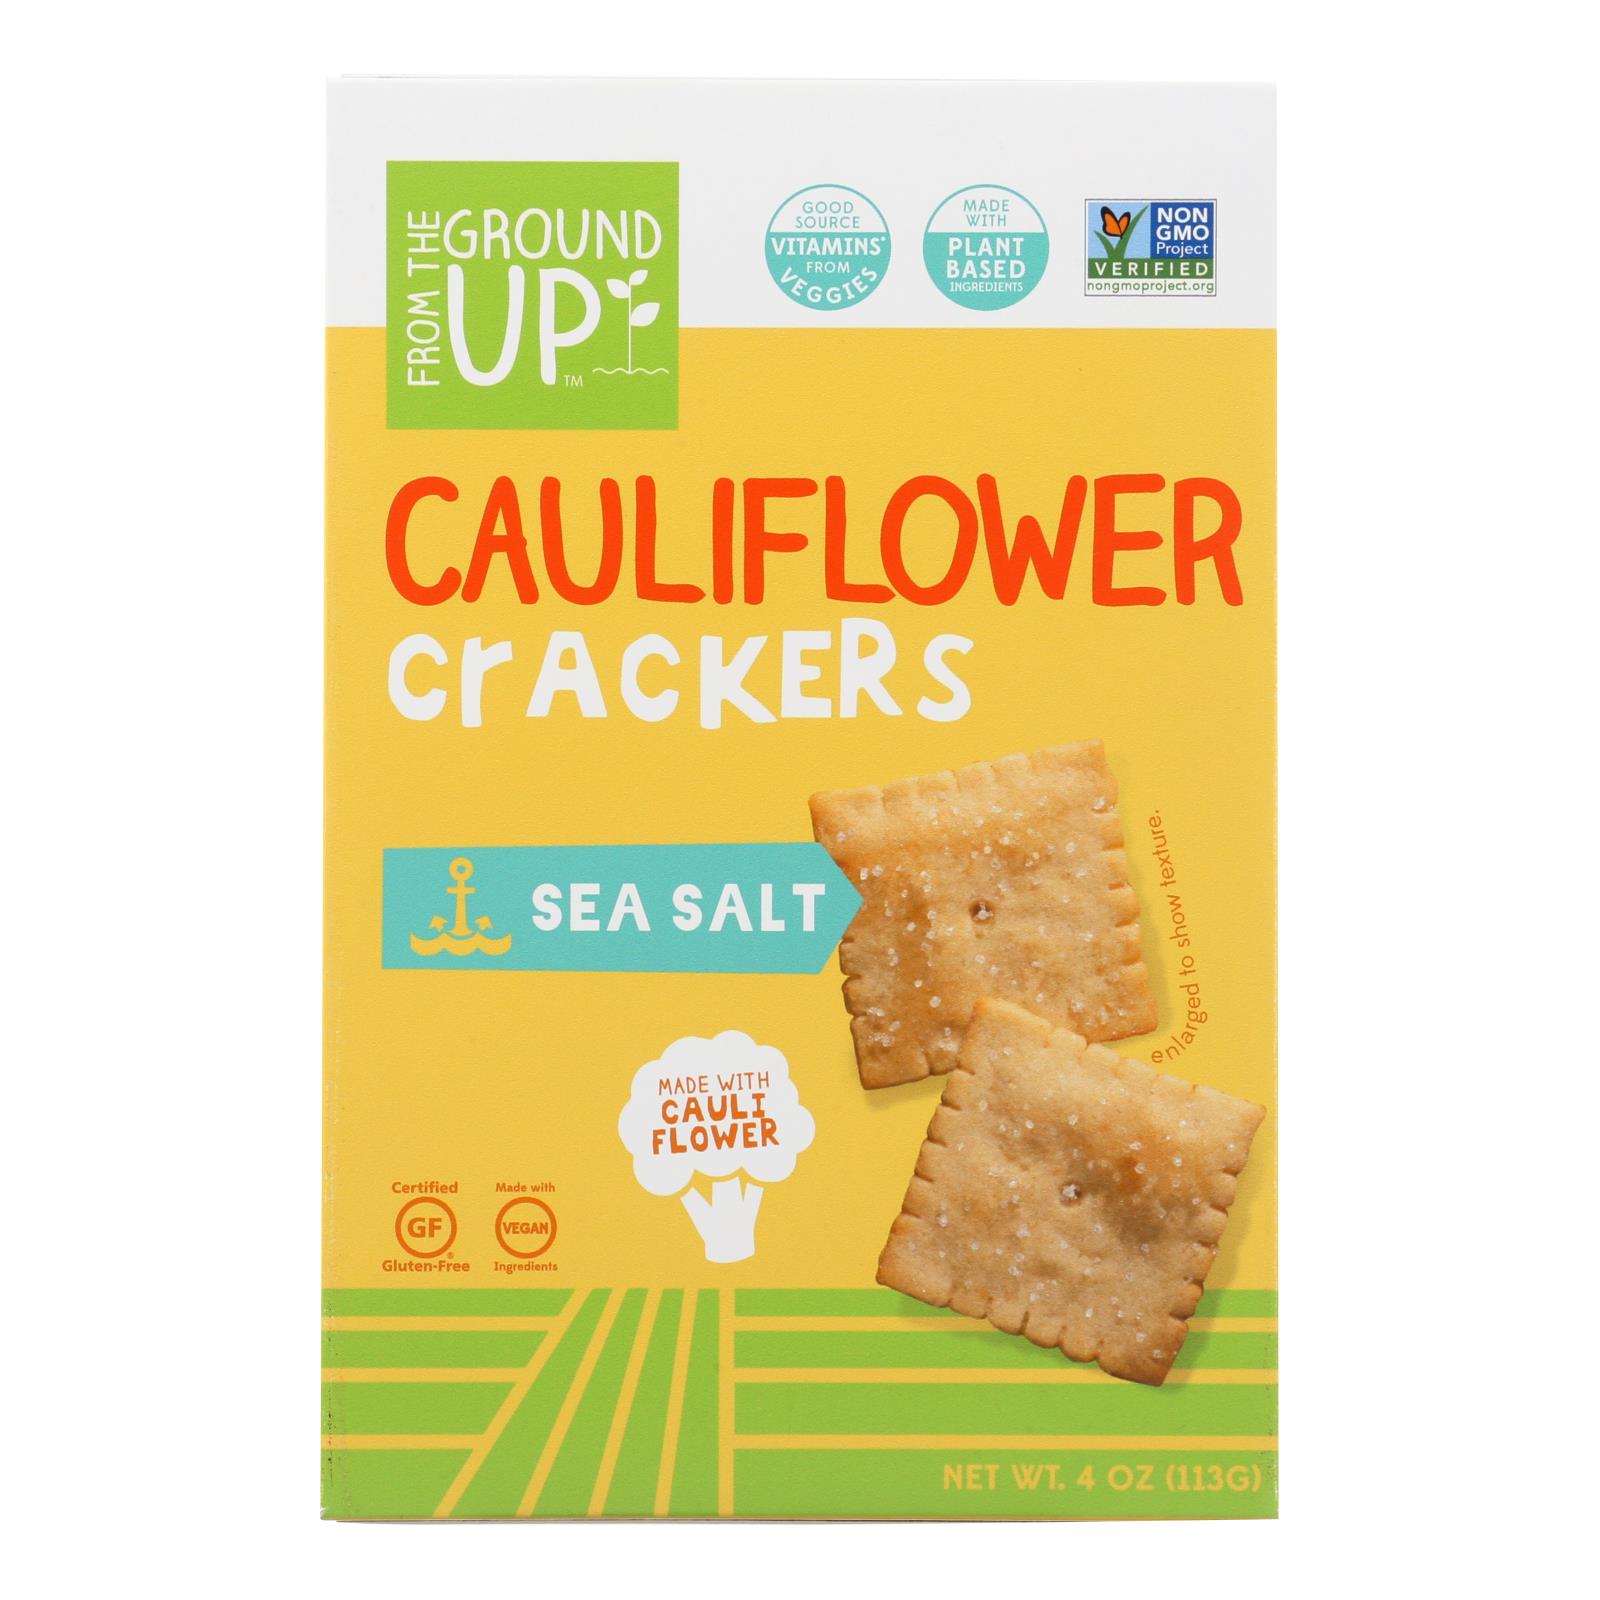 From The Ground Up - Cauliflower Crackers - Original - 6개 묶음상품 - 4 oz.